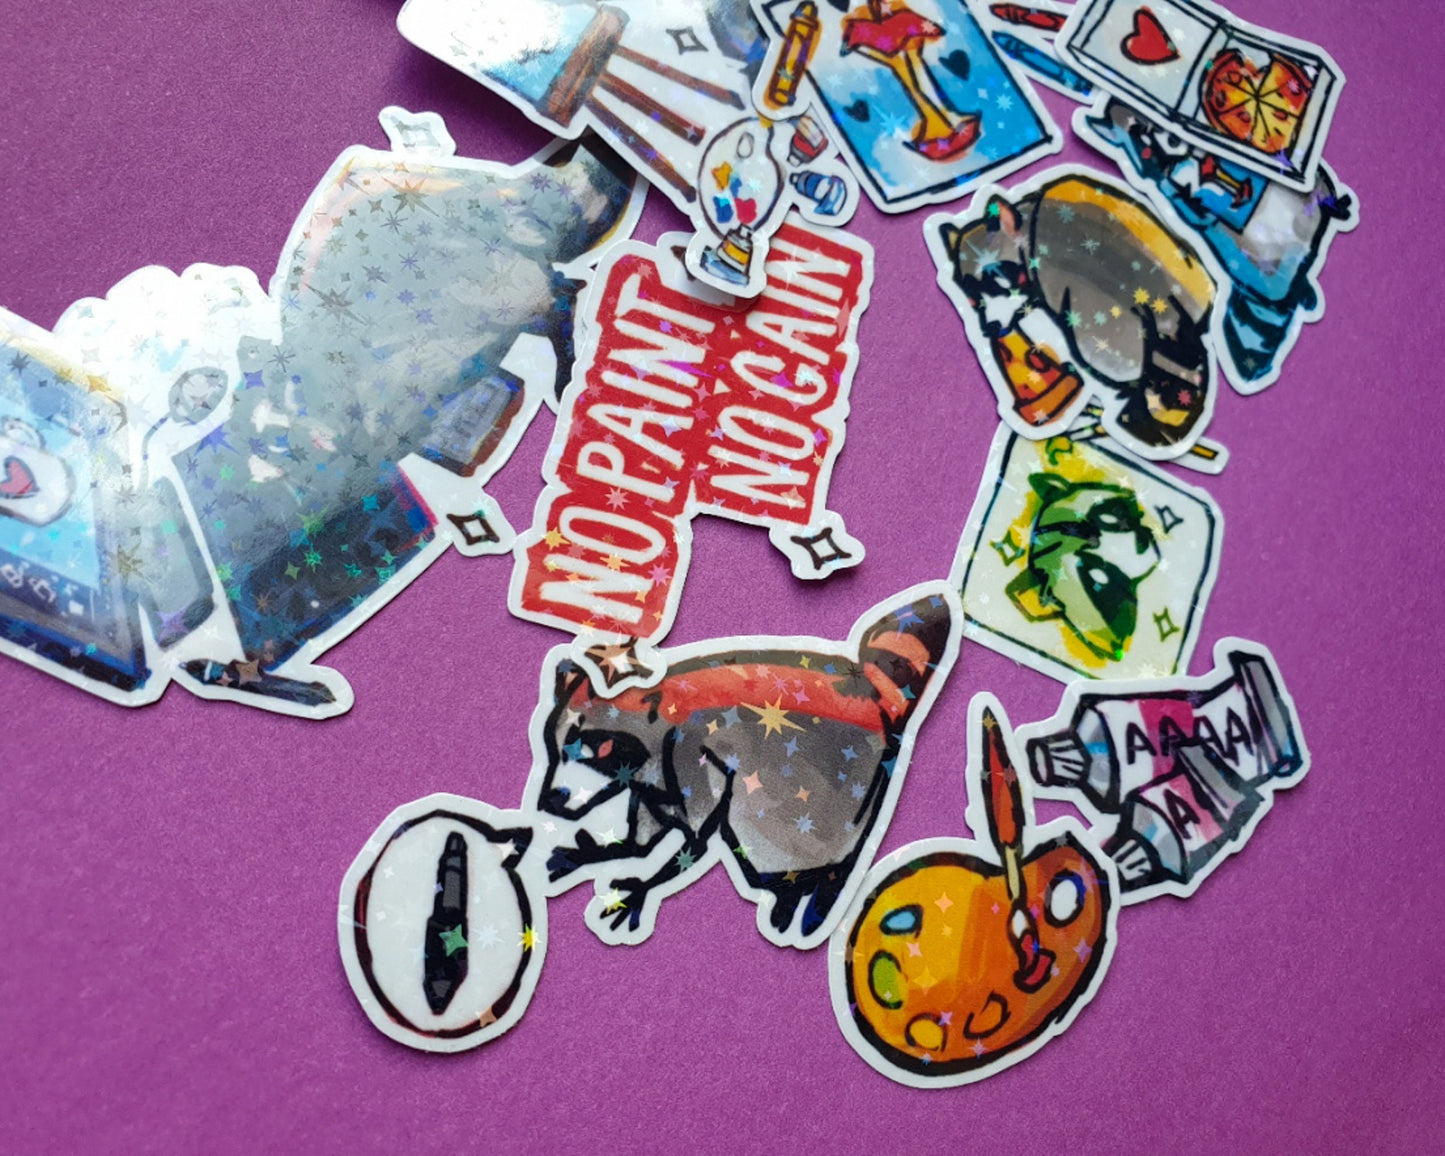 Artist Raccoon Sticker Pack - 12 Holographic Vinyl Stickers